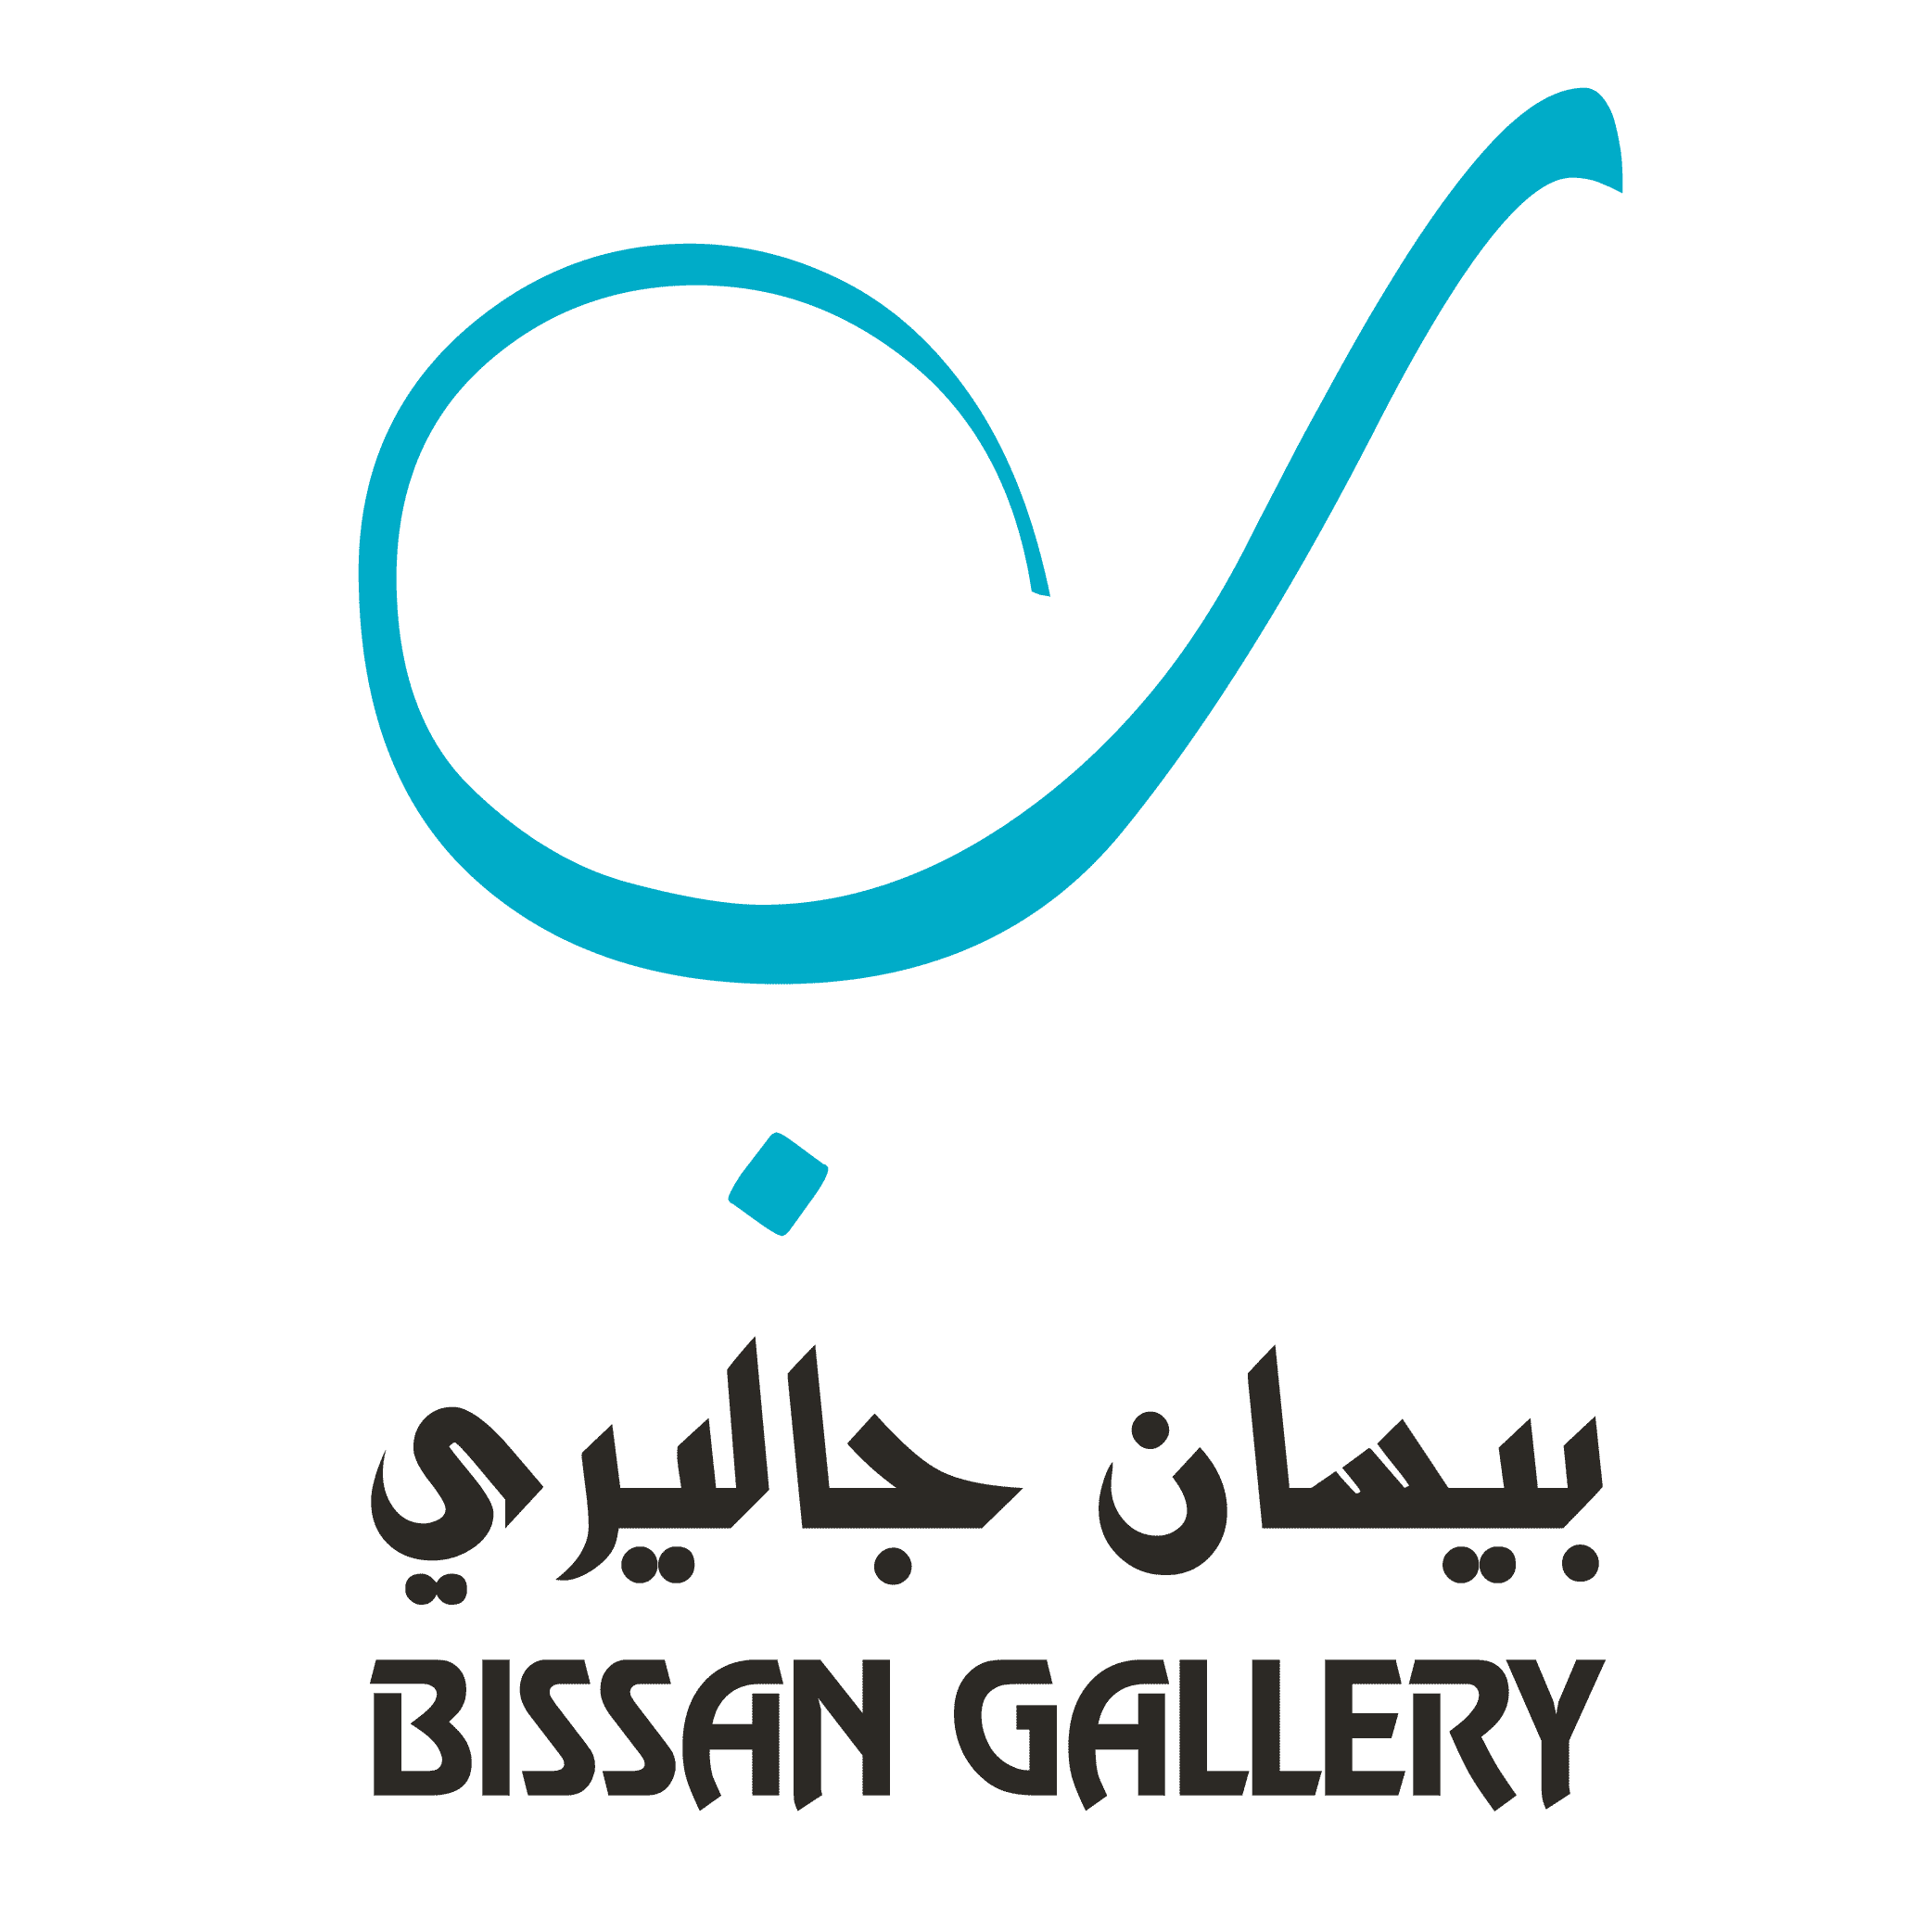 Bissan Gallery